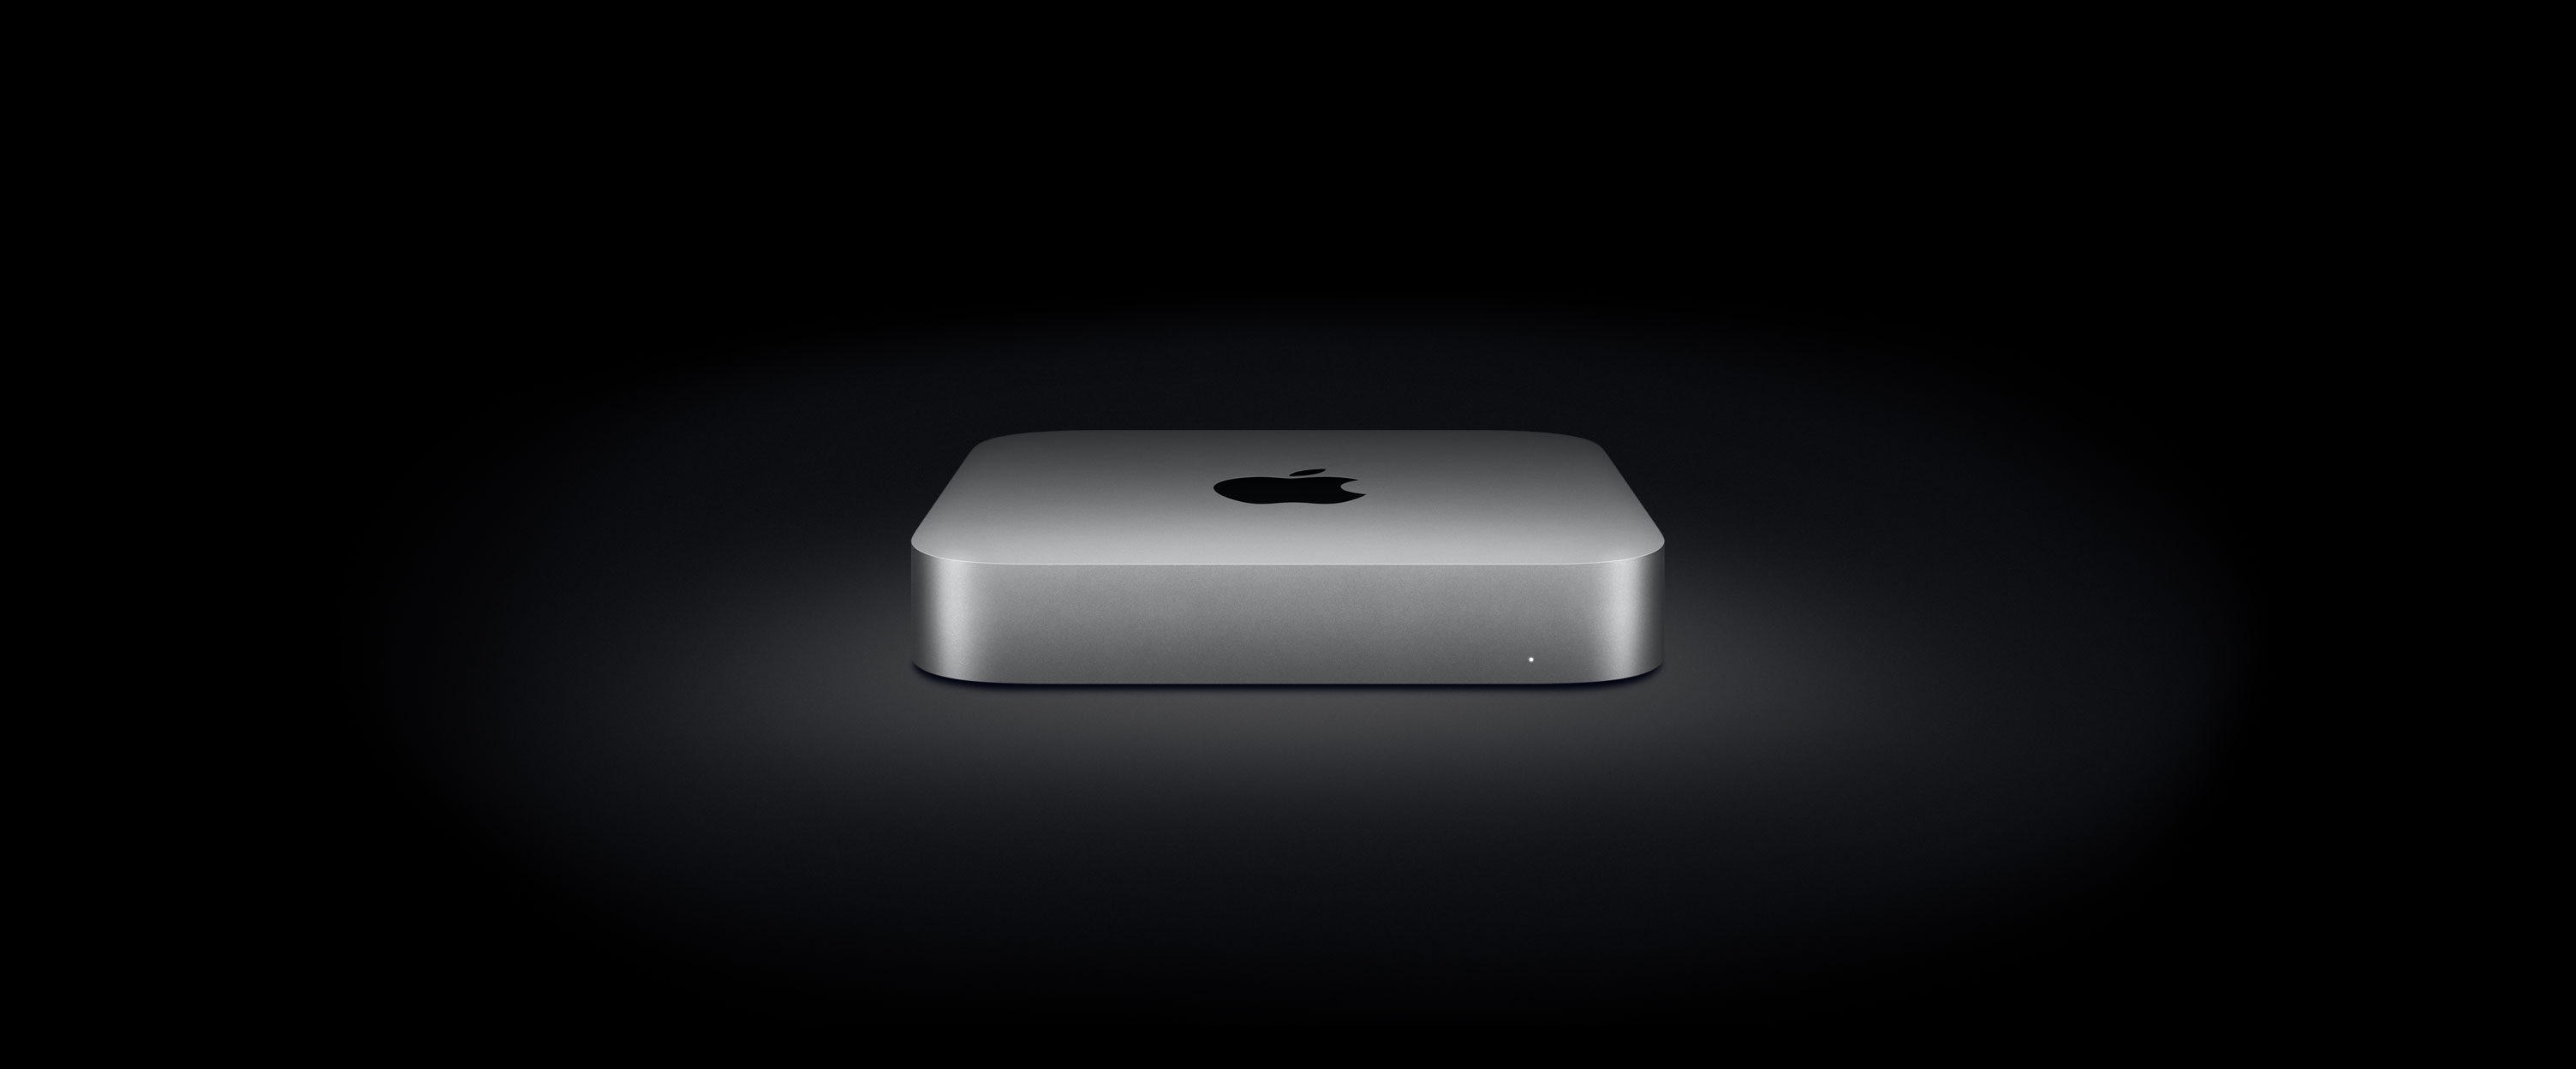 Mac mini - Technical Specifications - Apple (UK)